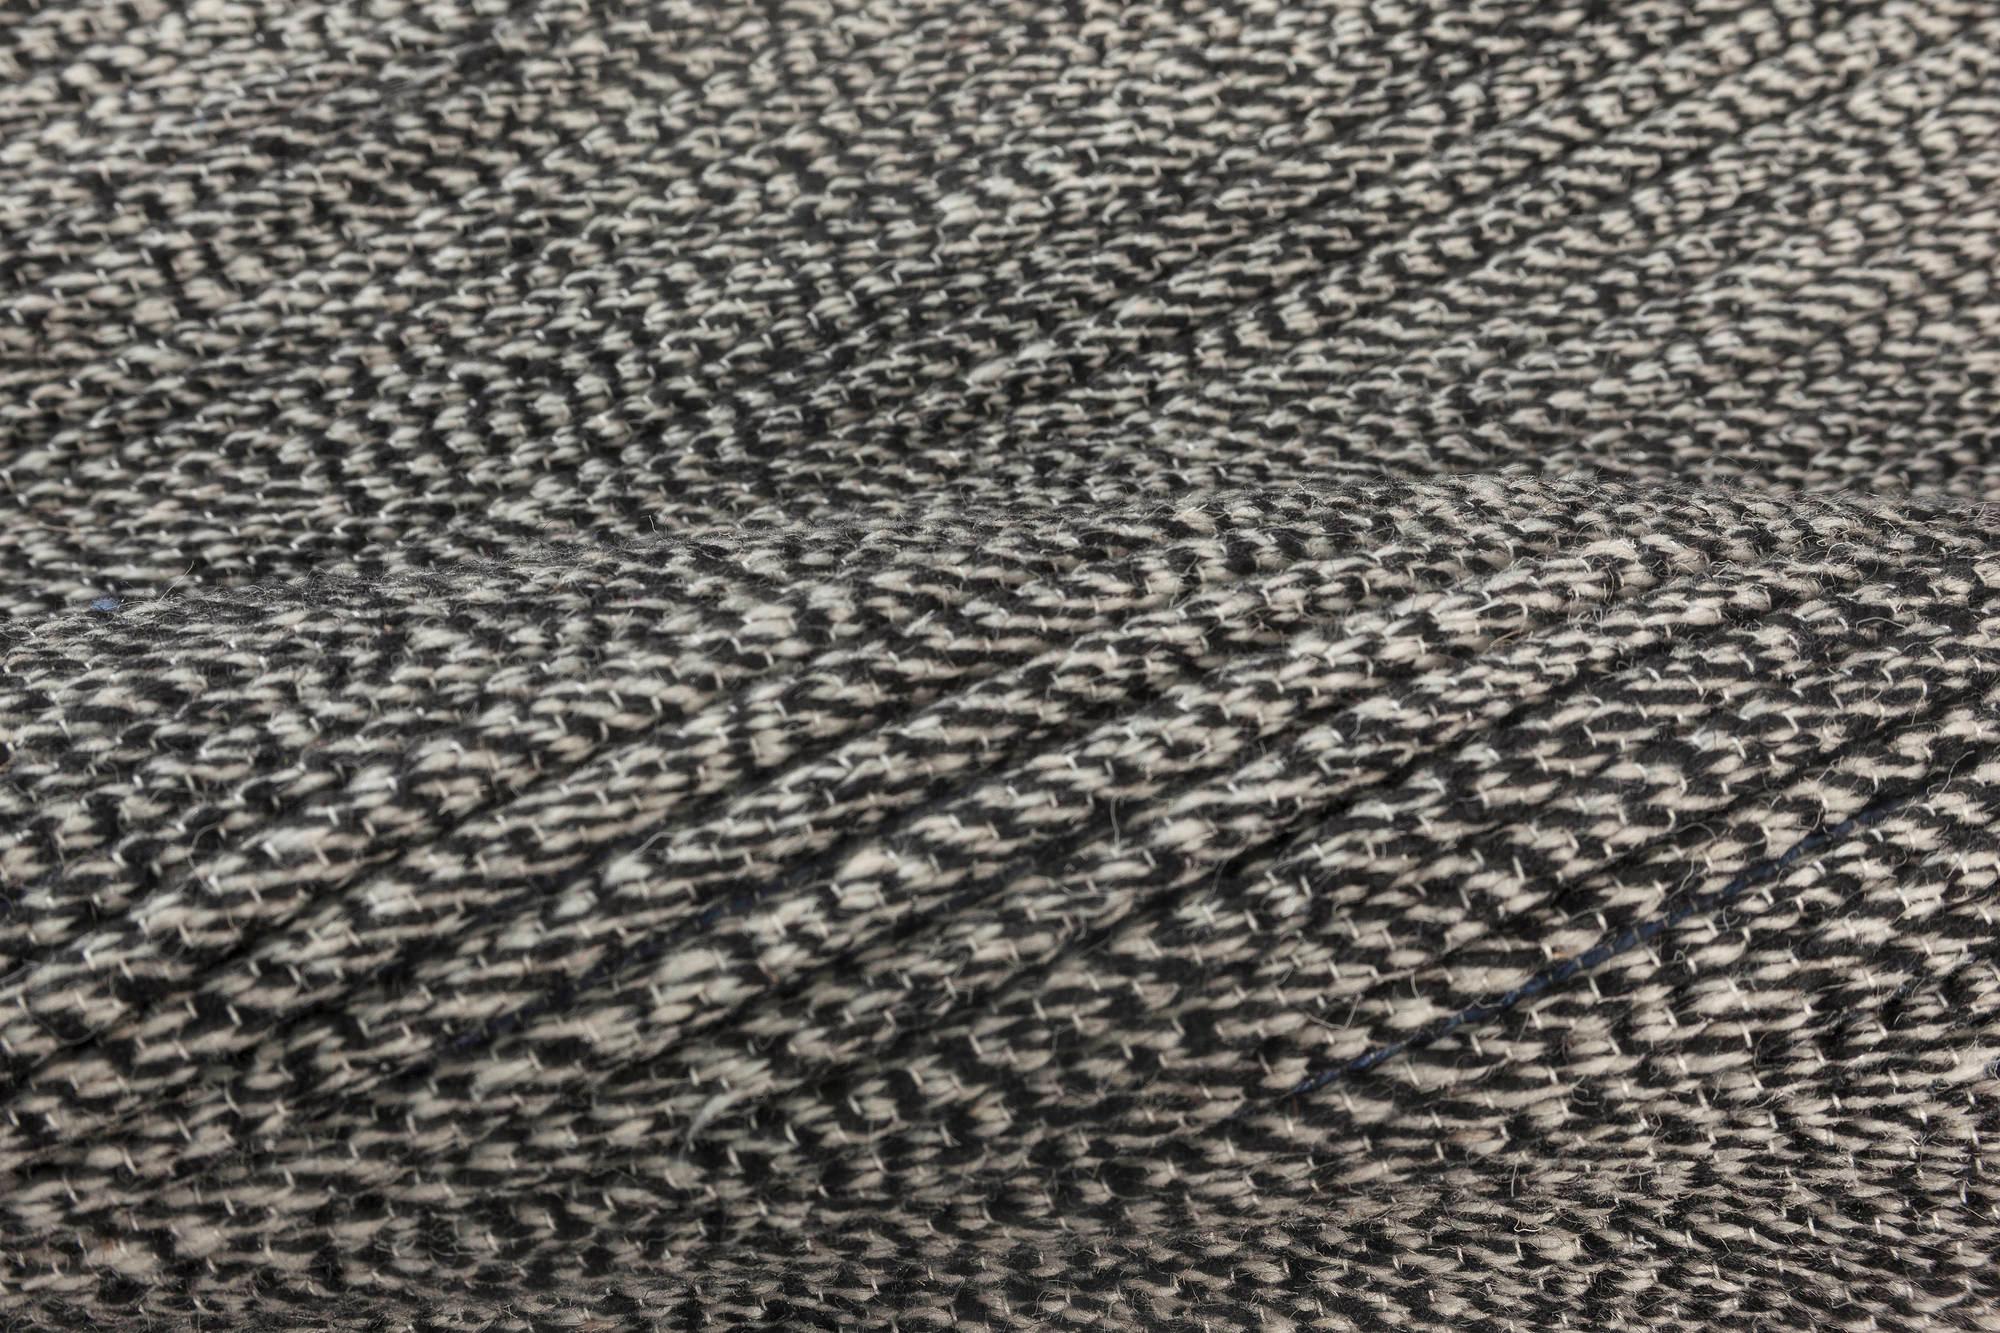 Contemporary Bauer Minimalist handmade wool rug by Doris Leslie Blau
Size: 6'6